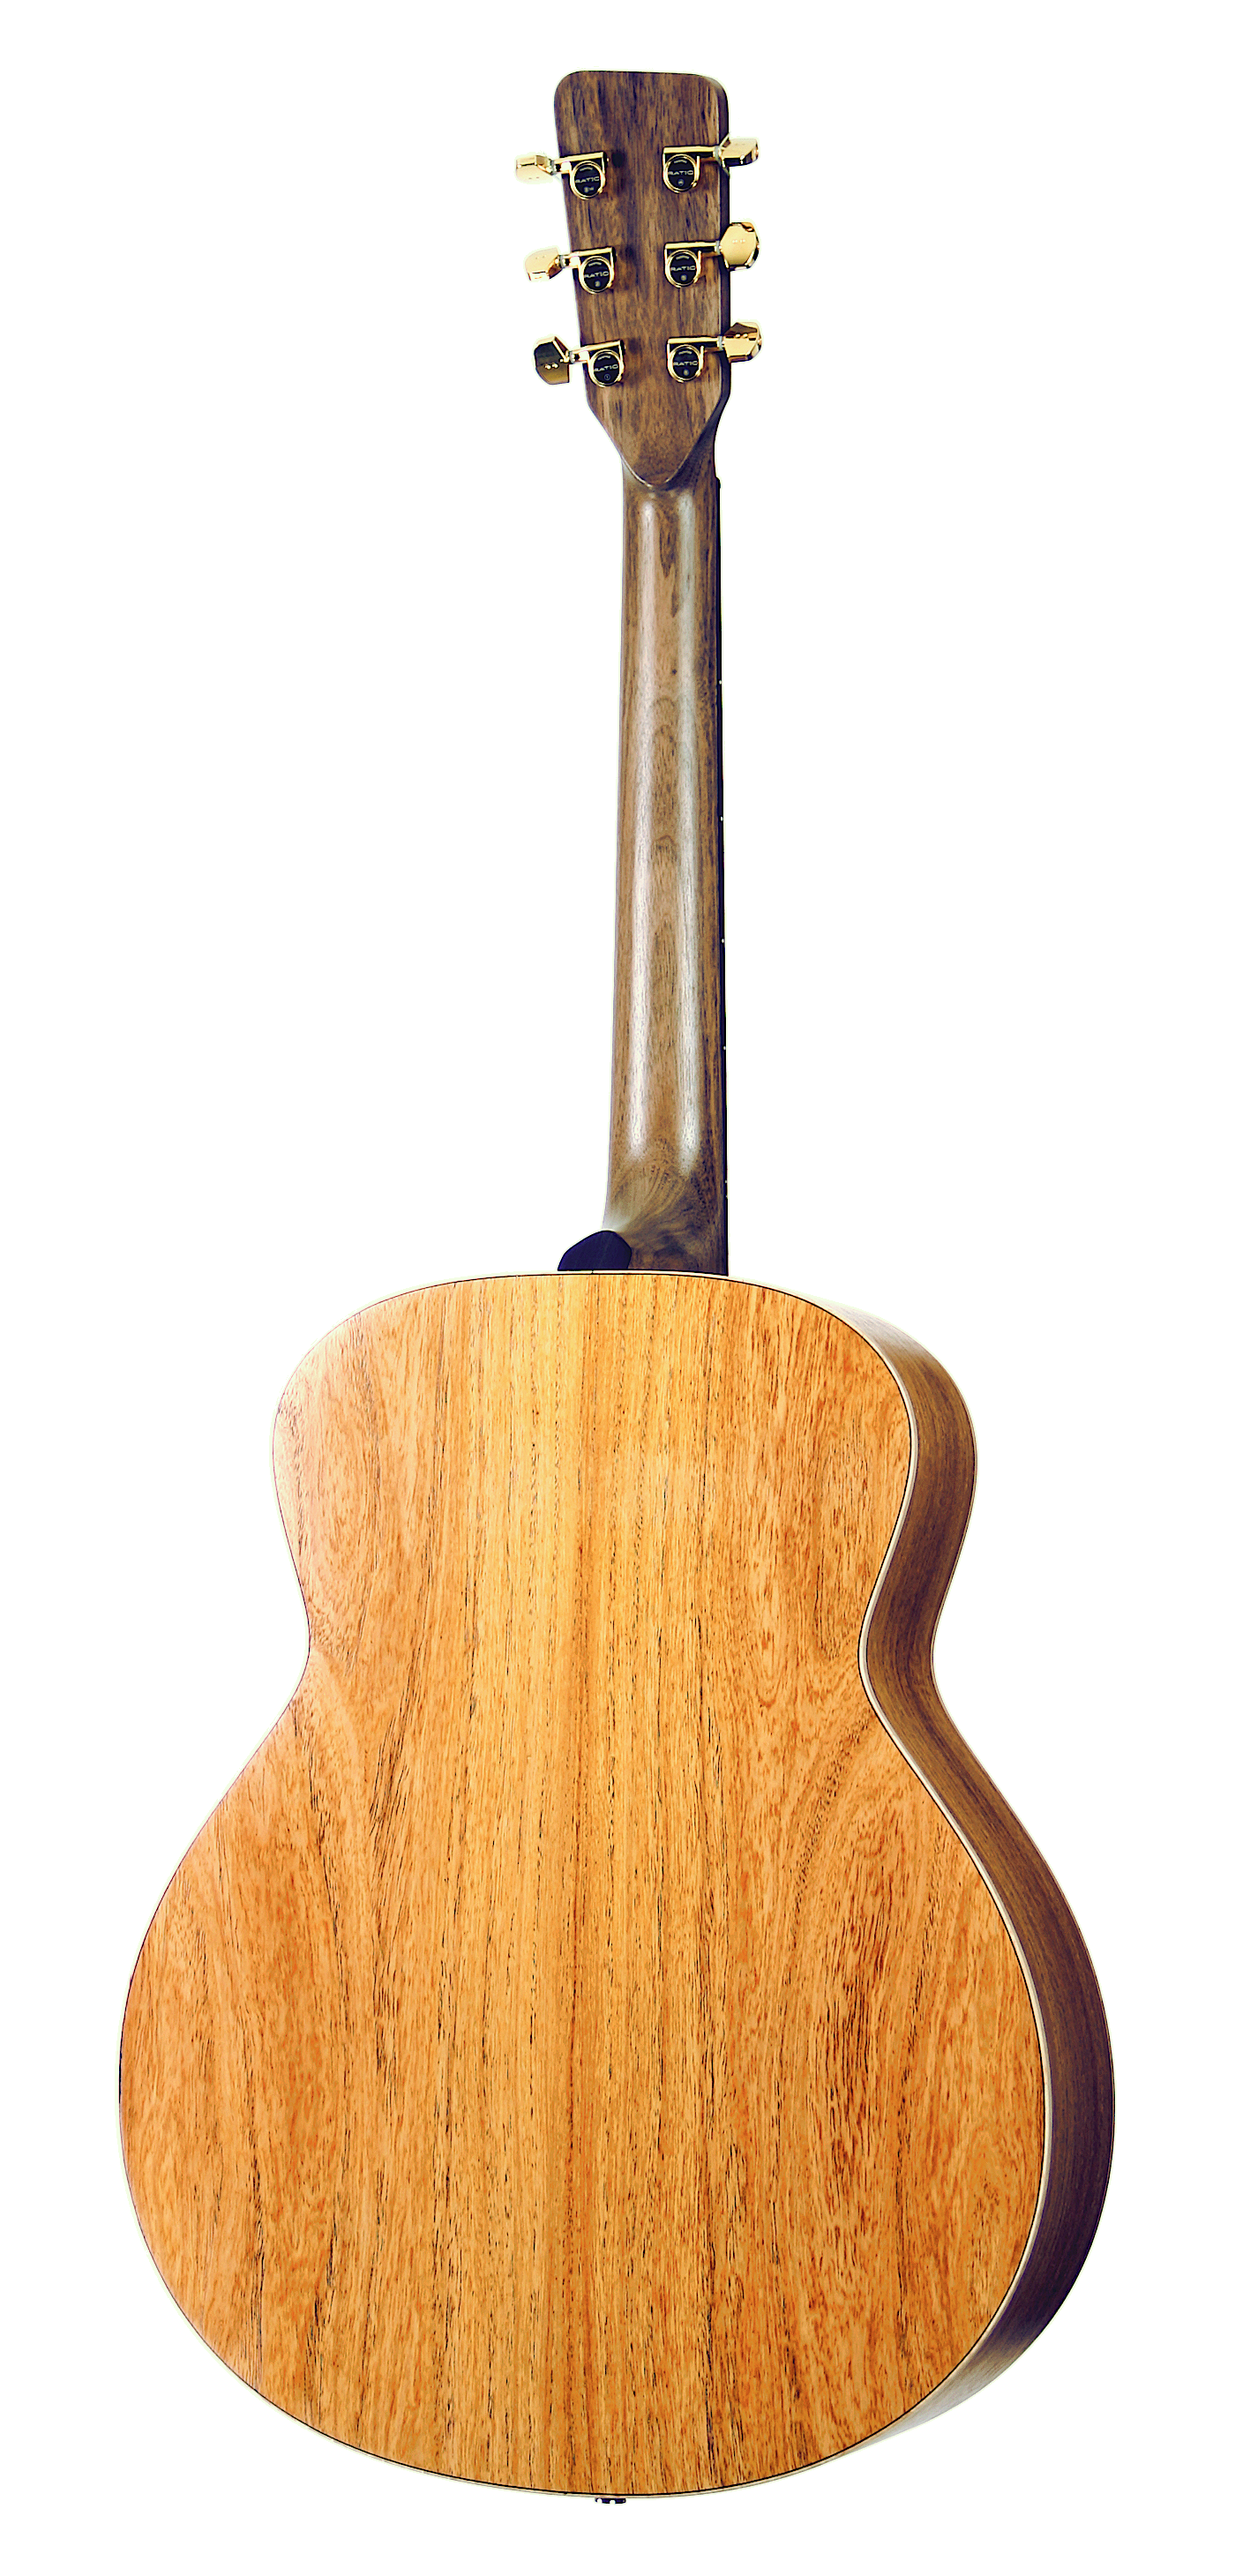 LEONA™ Jumbo, solid wood acoustic guitar. Red cedar soundboard, black walnut neck, rosewood body